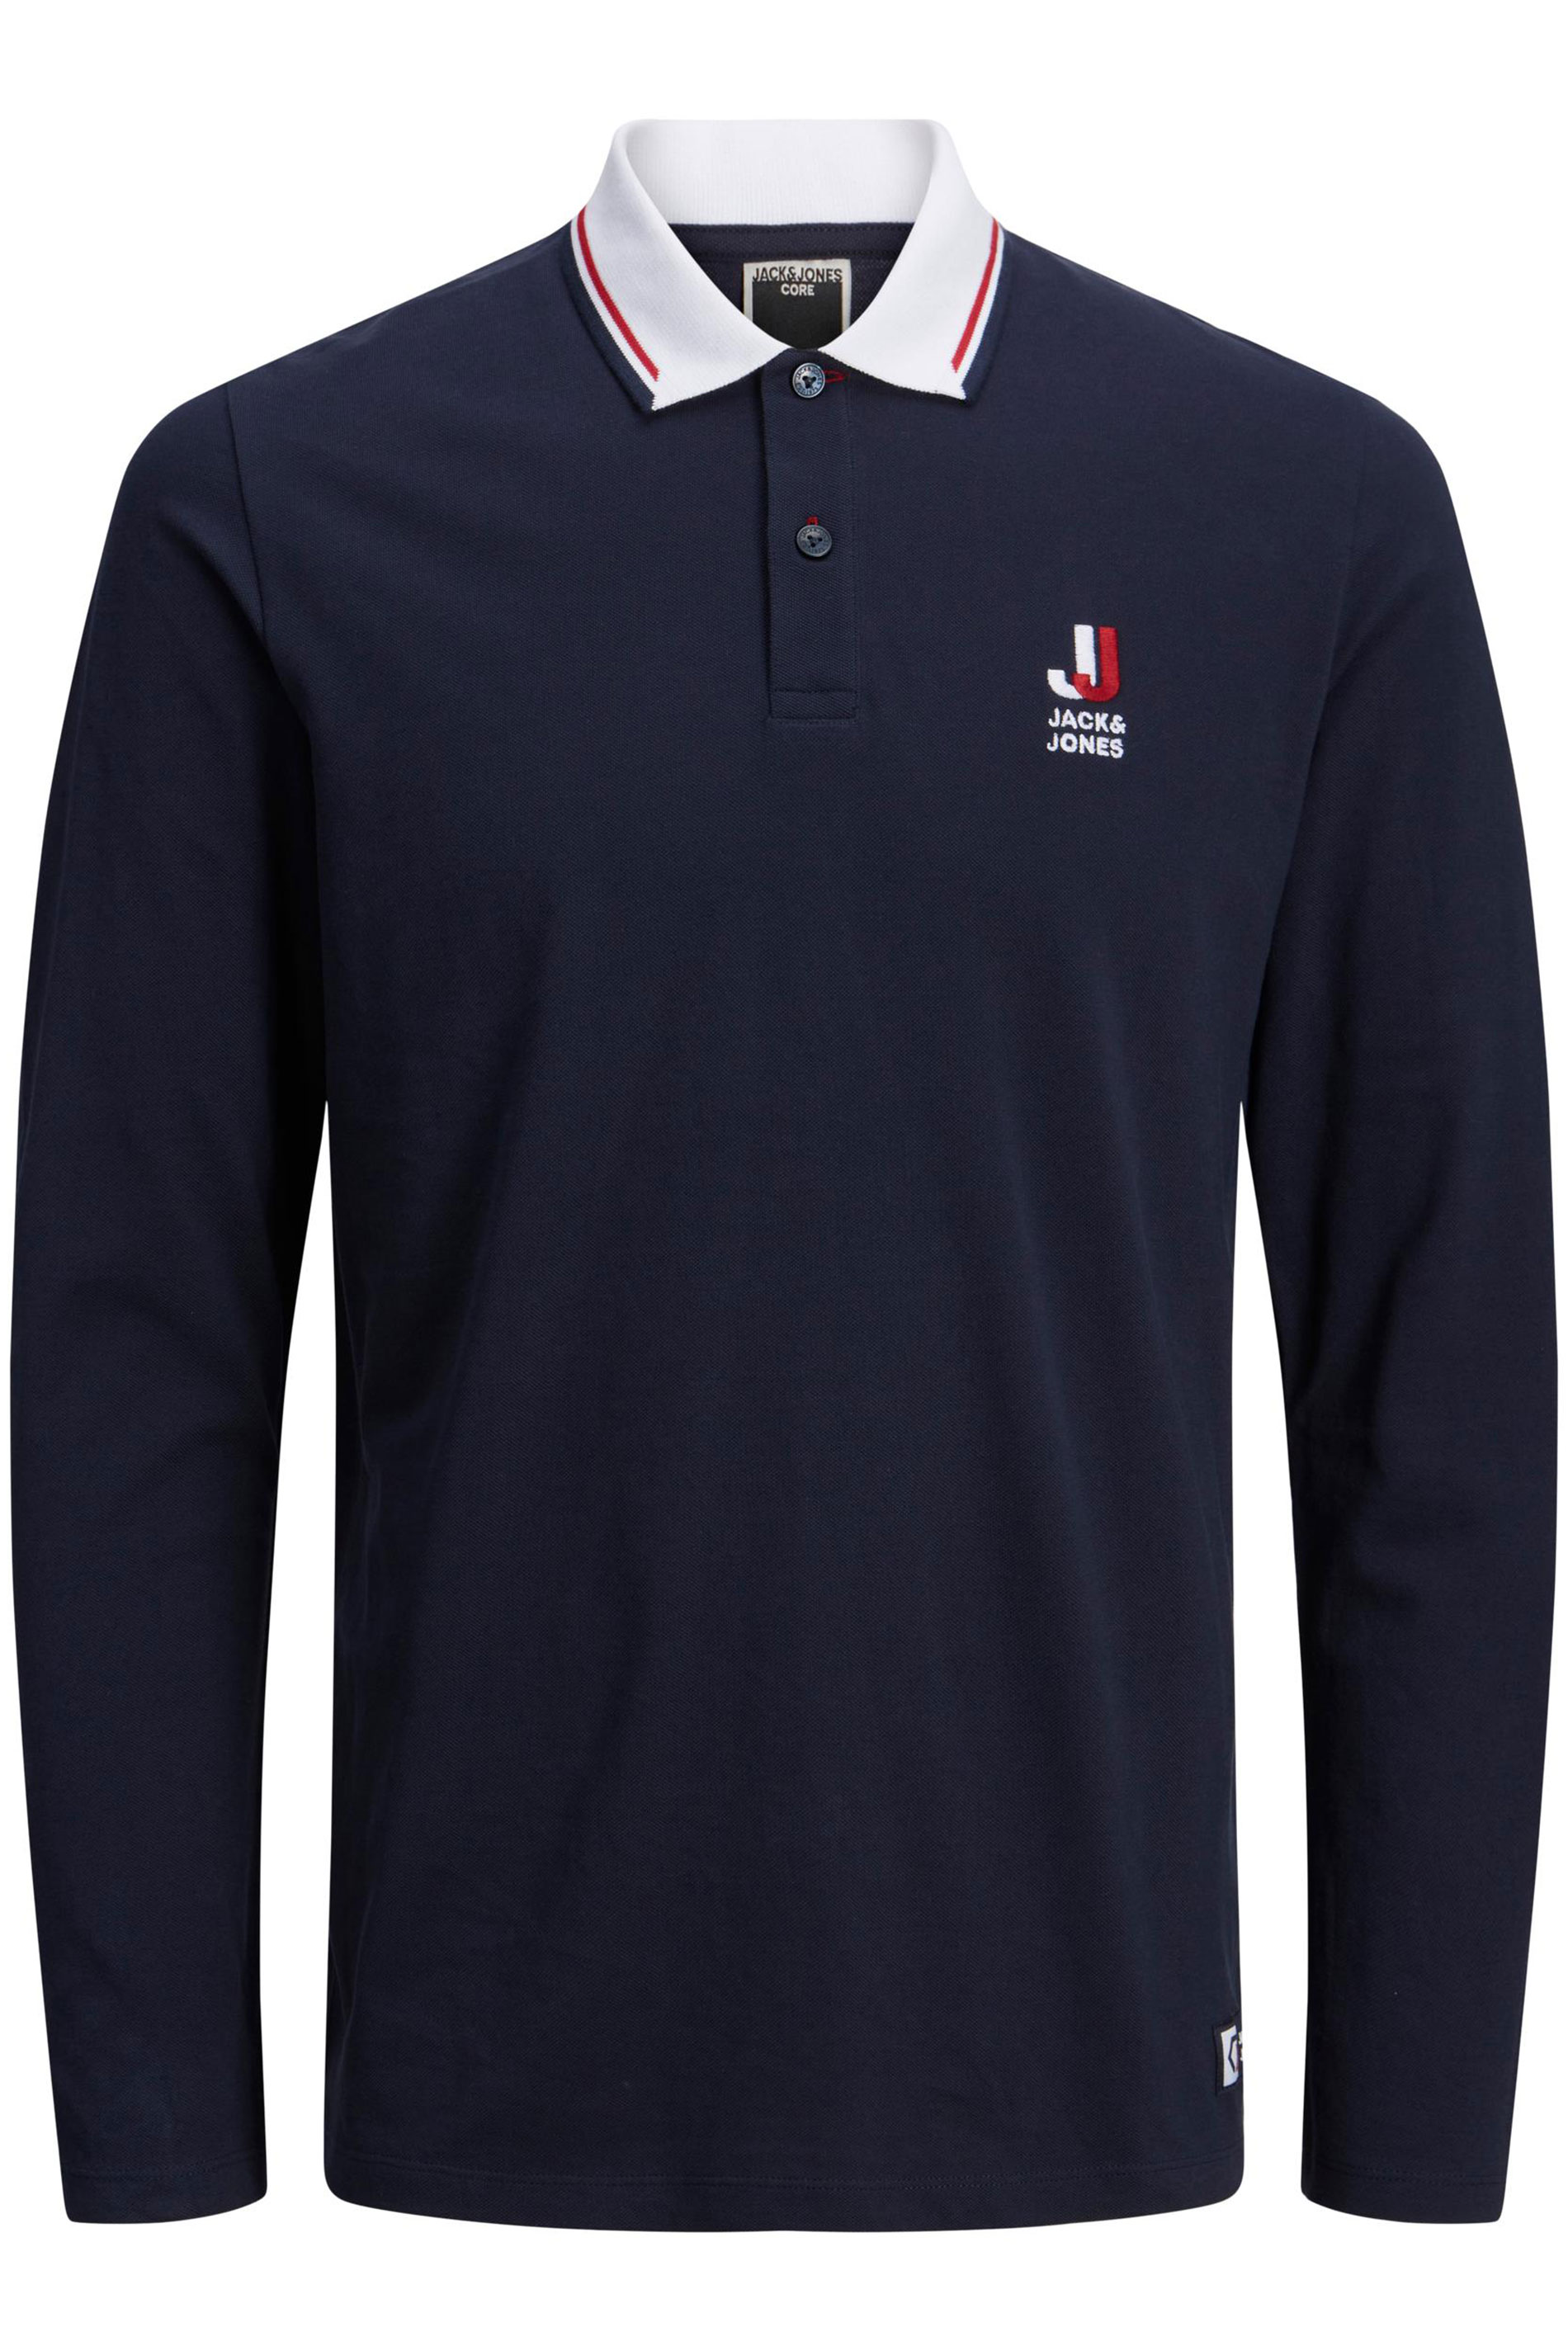 JACK & JONES Big & Tall Navy Blue Long Sleeve Polo Shirt 1